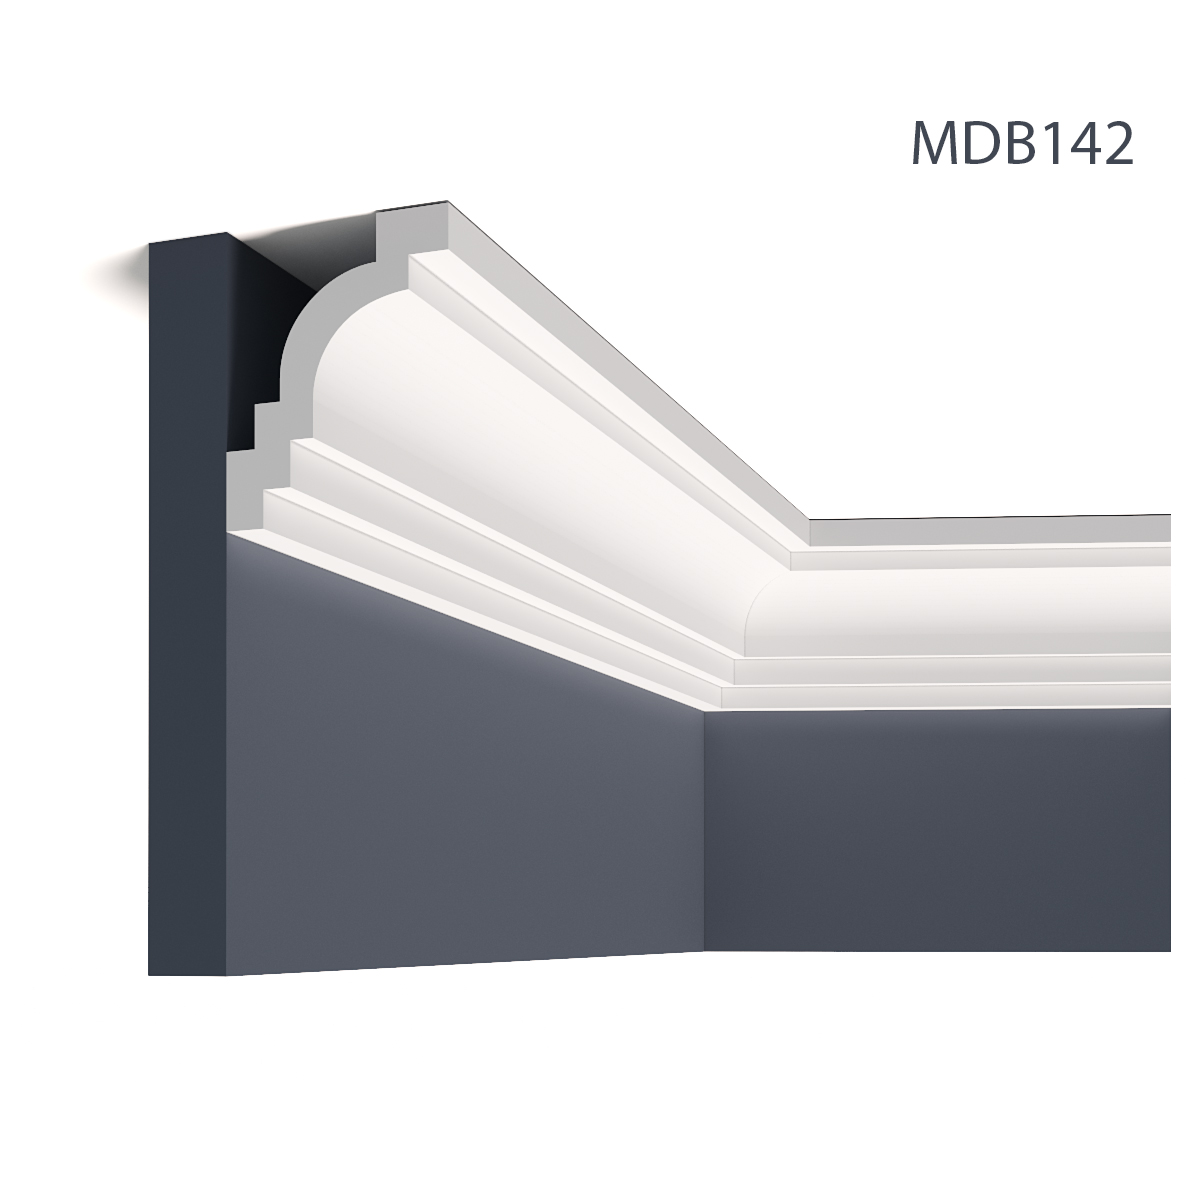 Cornișe tavan Mardom Decor MRD-MDB142, material: ProFoam